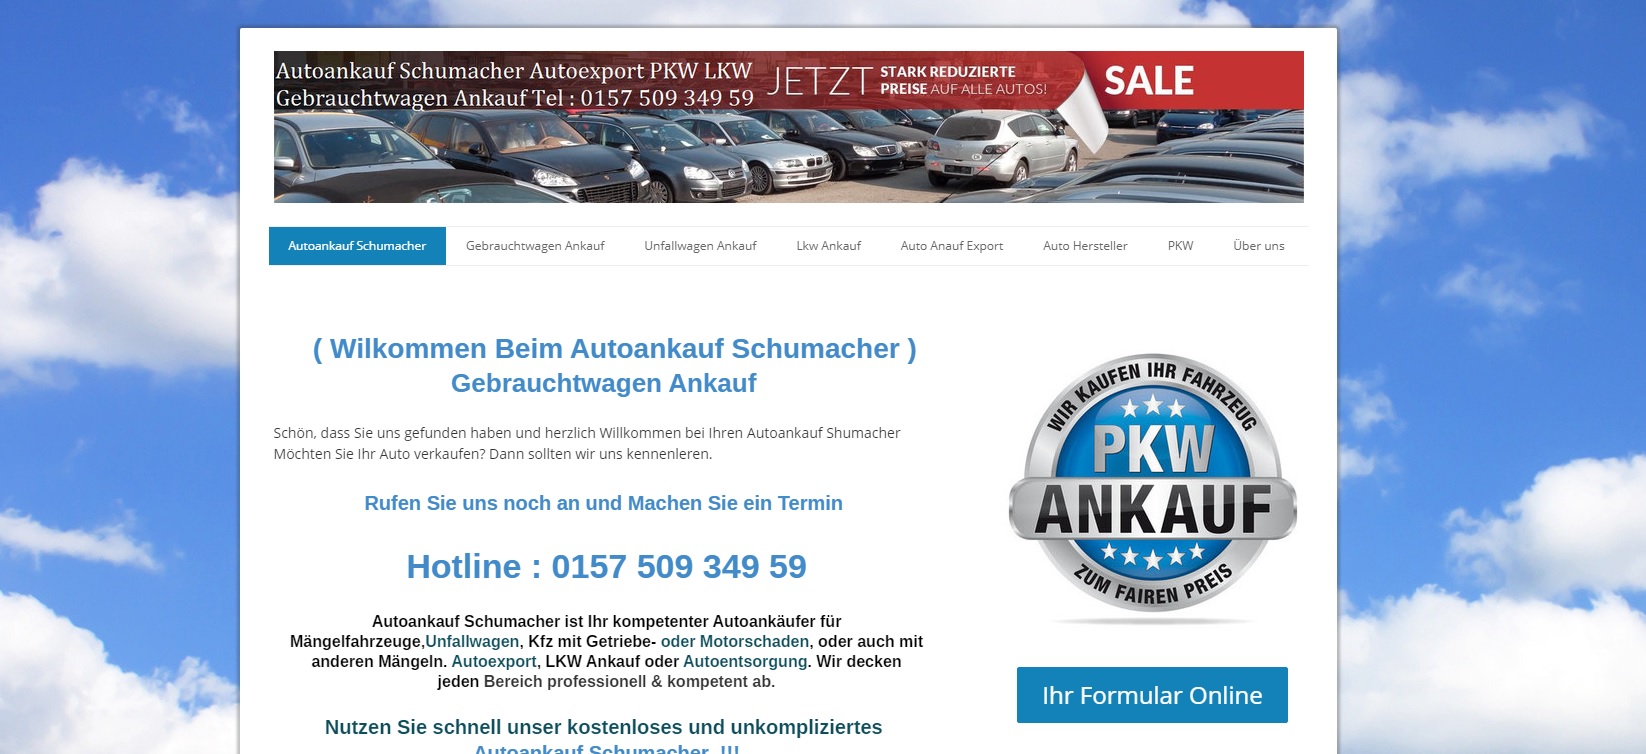 autoankauf schumacher de kauft jedes fahrzeug bundesweit - Autoankauf-Schumacher.de kauft jedes Fahrzeug bundesweit